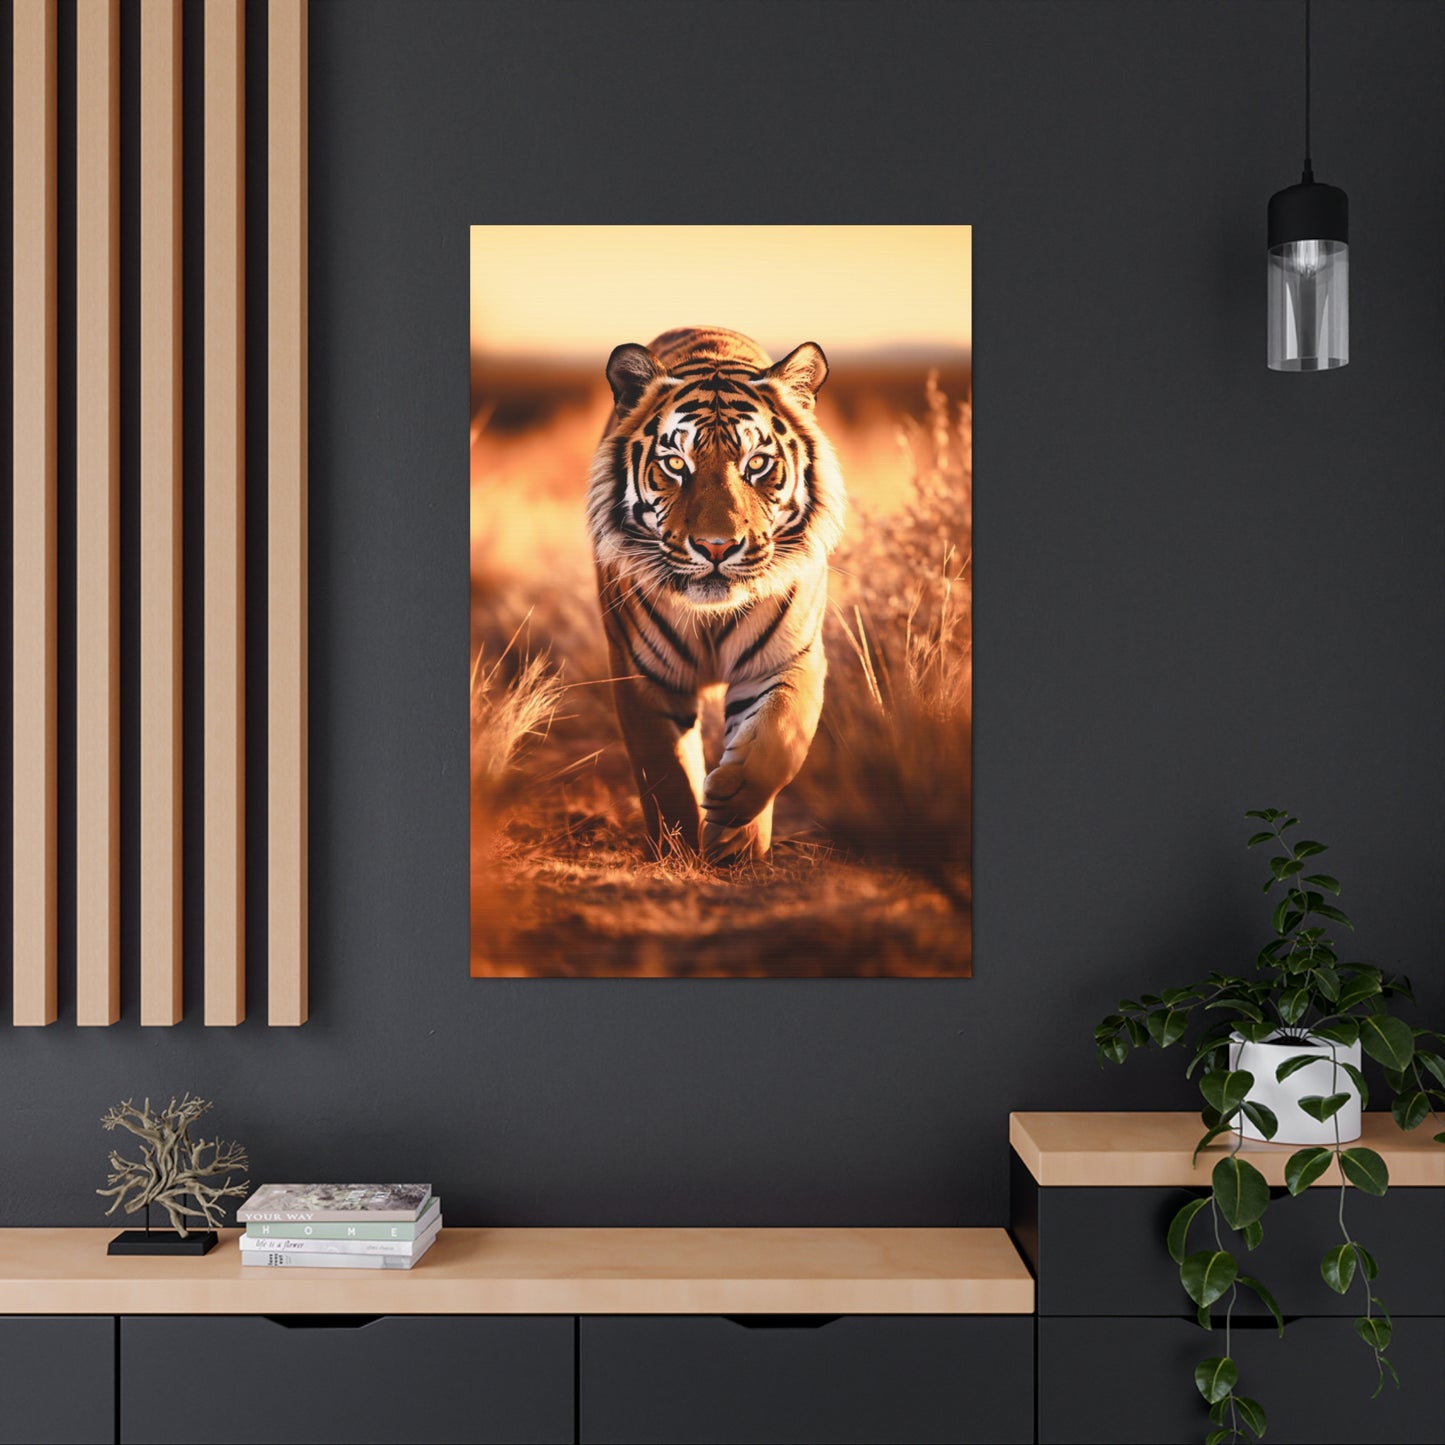 aesthetic tiger indoor decor